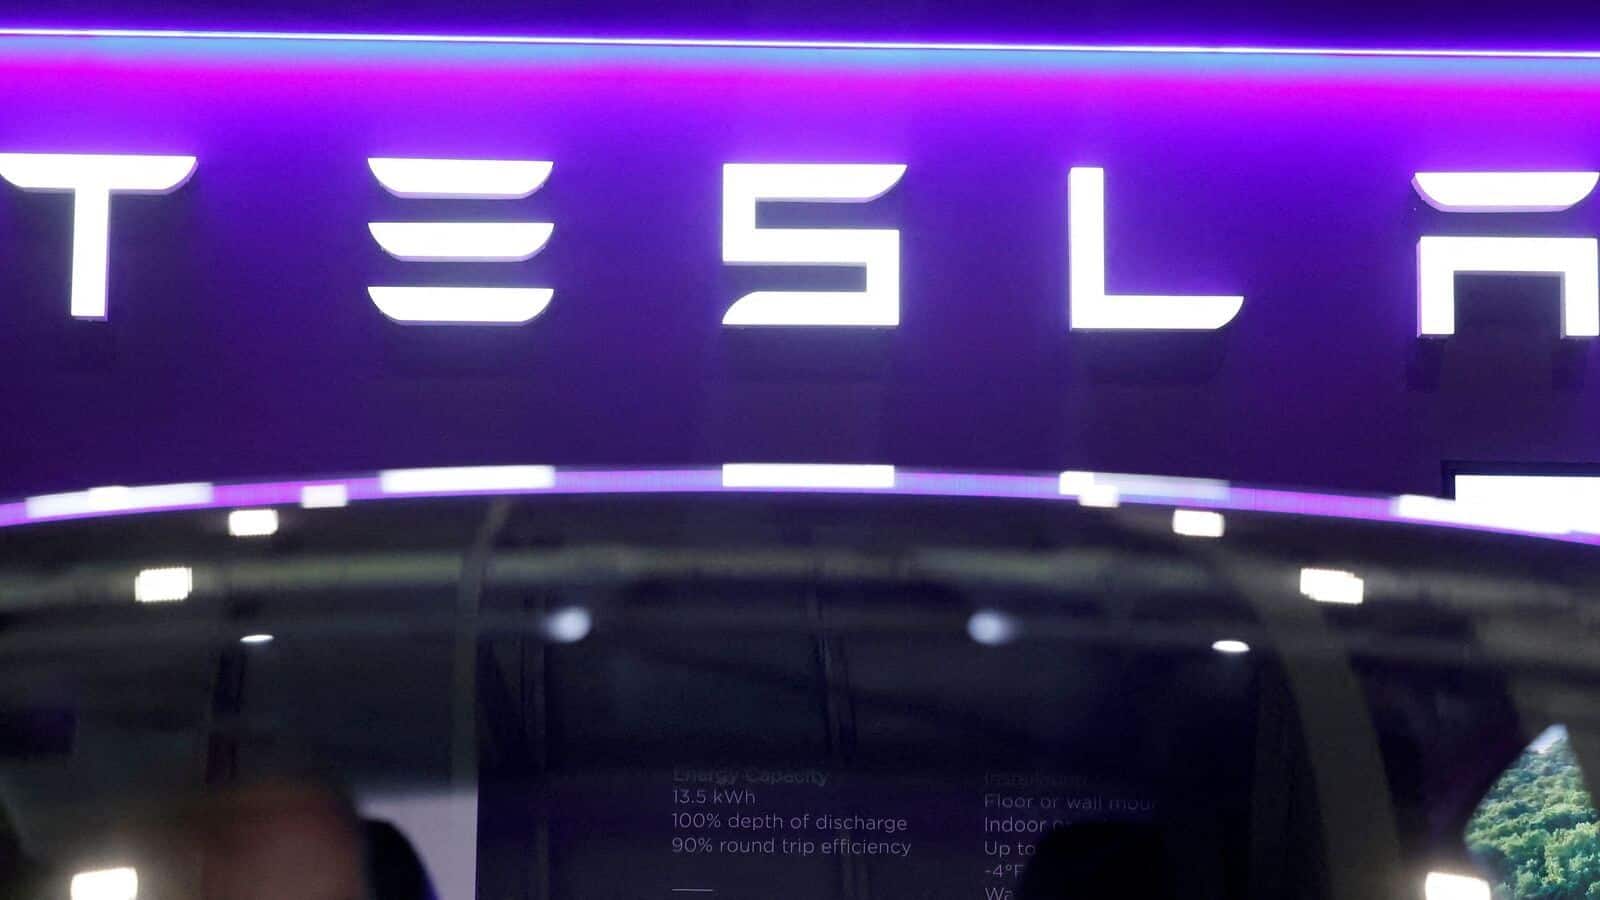 Tesla sues Indian battery manufacturer for alleged trademark infringement